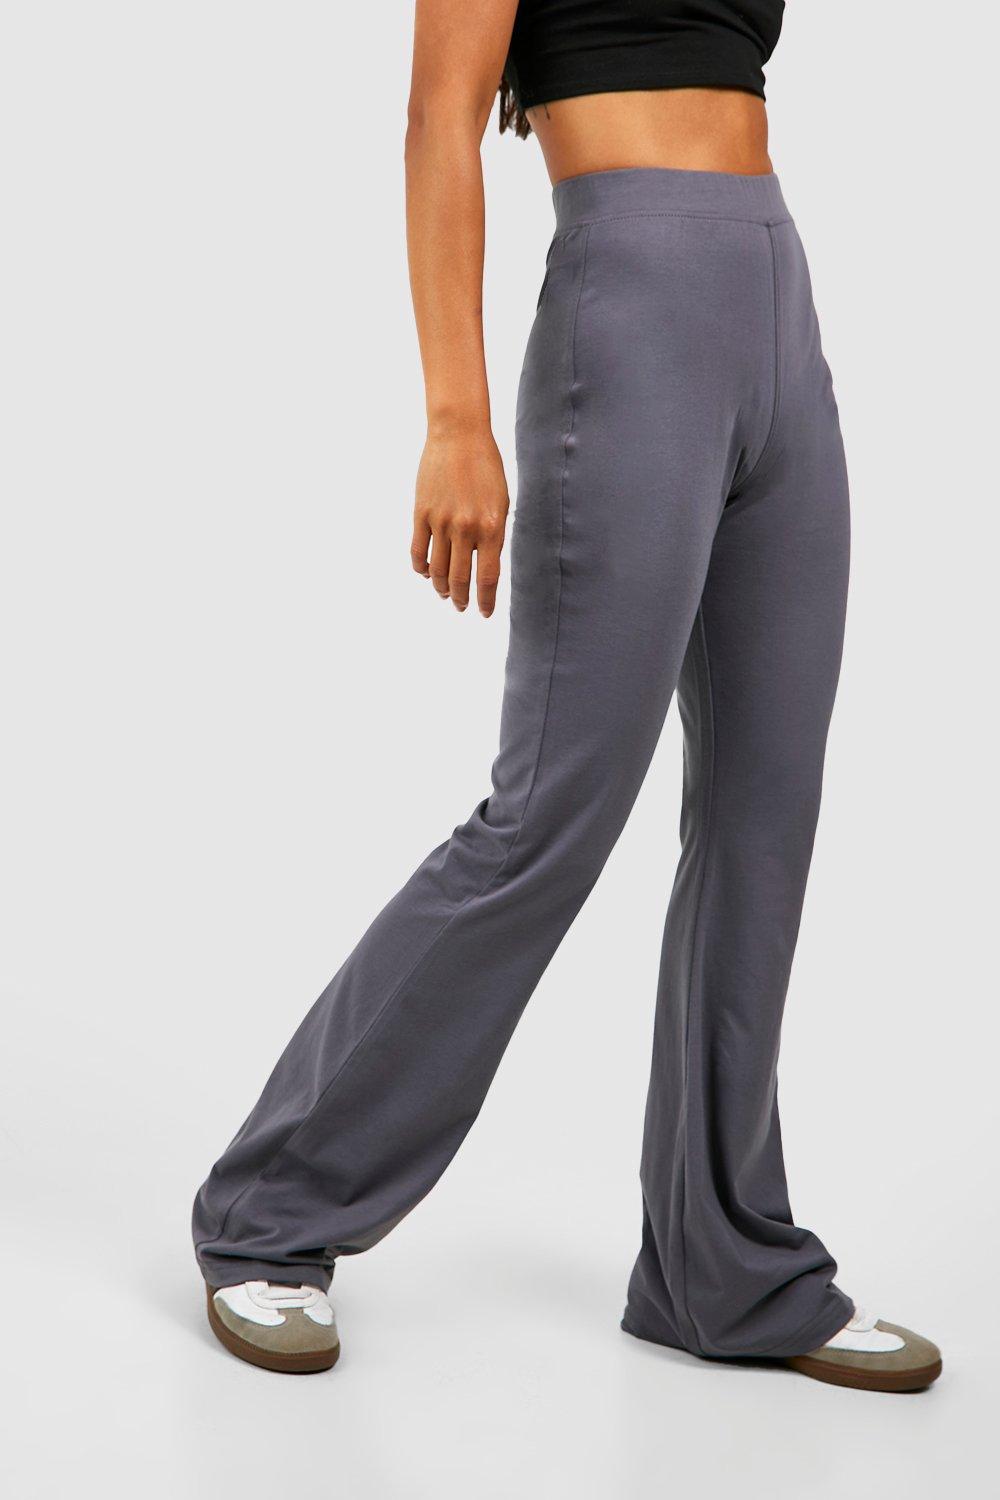 High Waist Flare Leggings Women 2023 Free Size Yoga Pants High